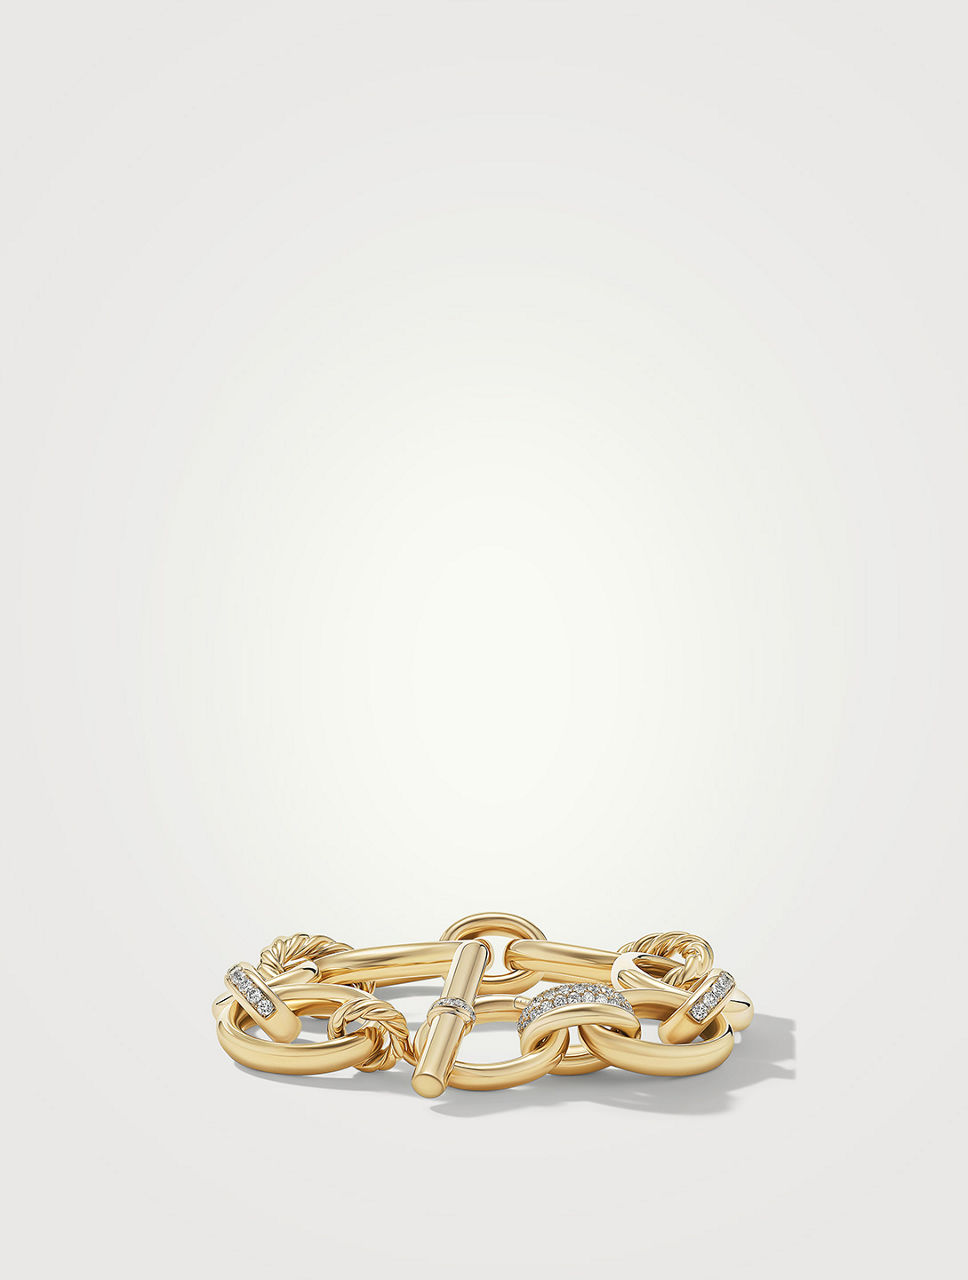 Dy Mercer™ Chain Bracelet In 18k Yellow Gold With Pavé Diamonds